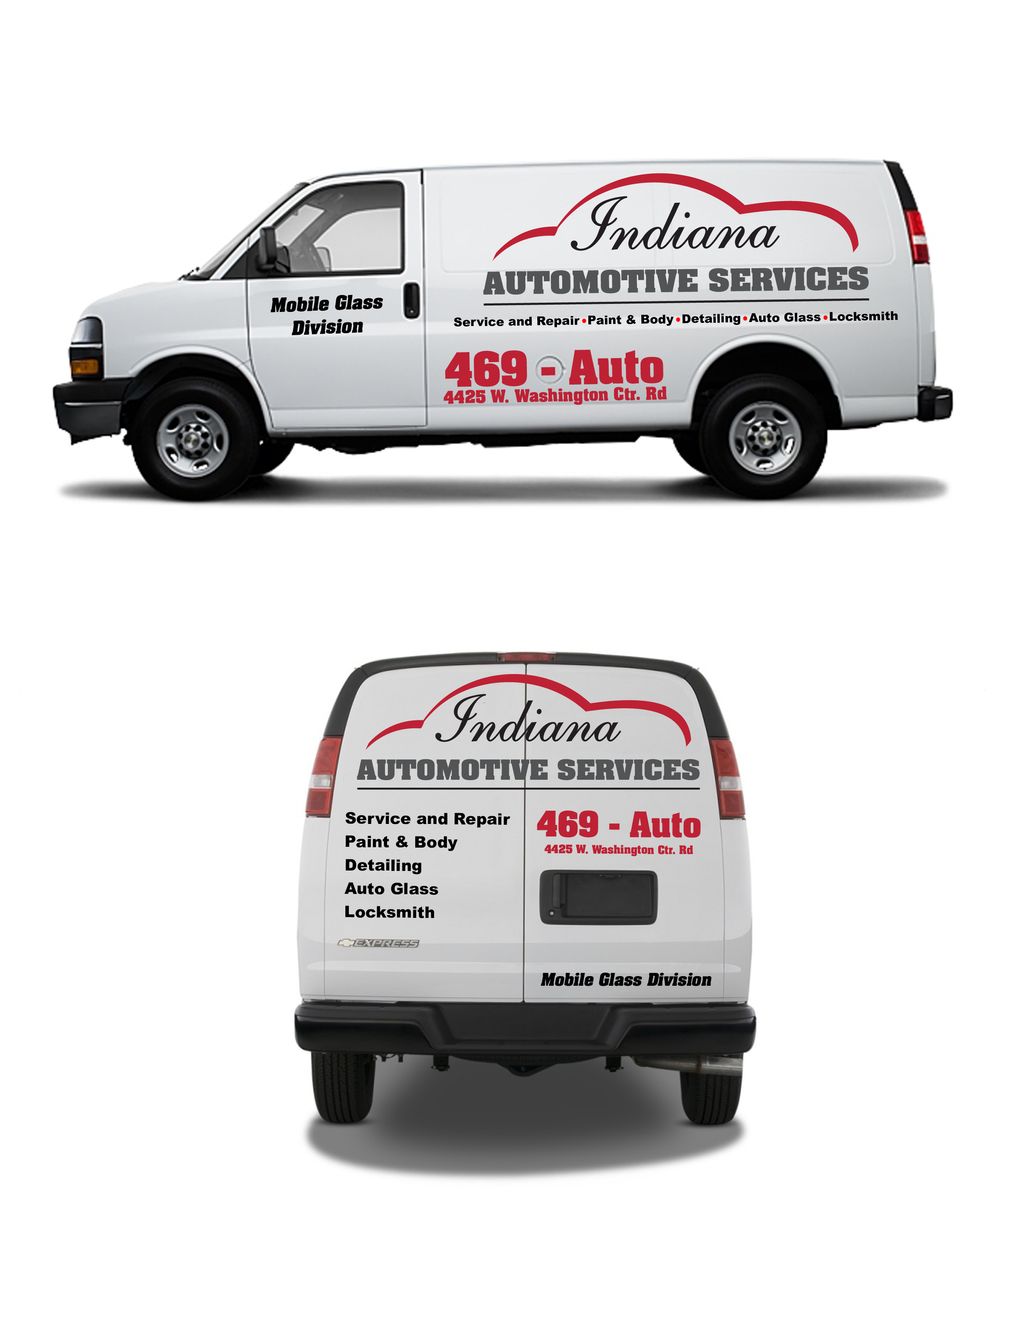 Indiana Automotive Services